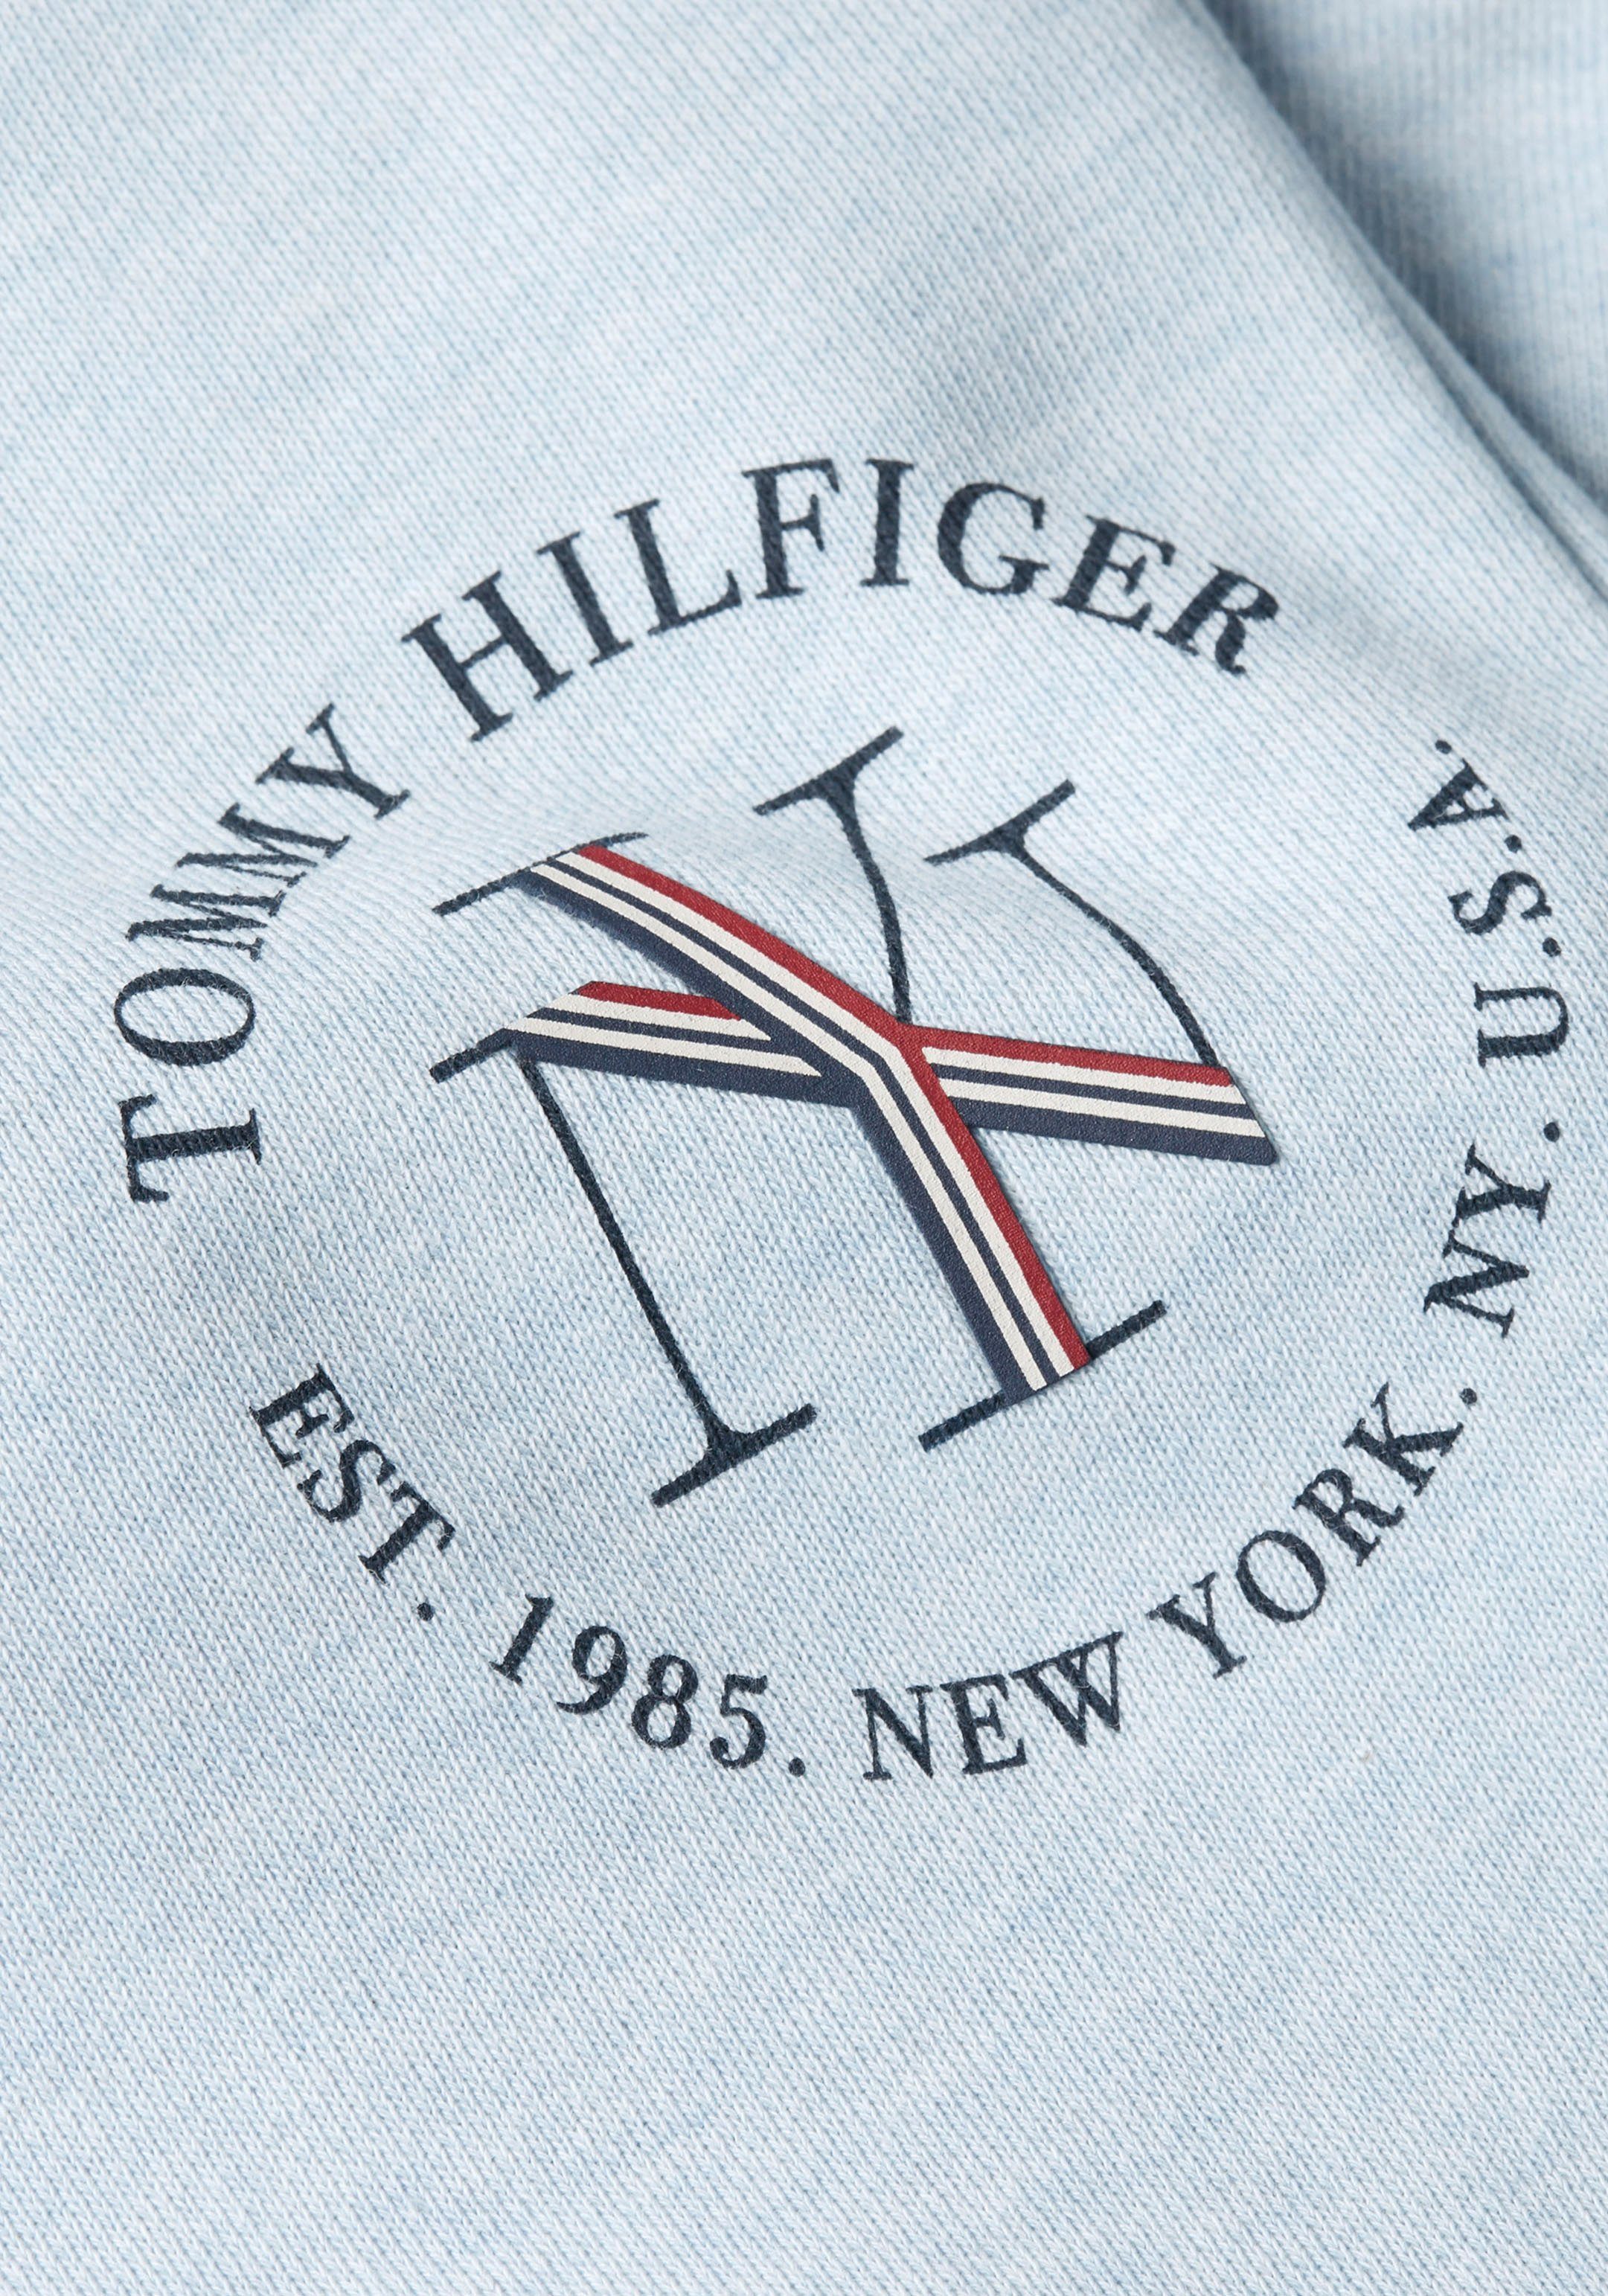 Breezy-Blue-Heather ROUNDALL Sweatpants Tommy NYC Tommy Hilfiger SWEATPANTS TAPERED mit Hilfiger Markenlabel